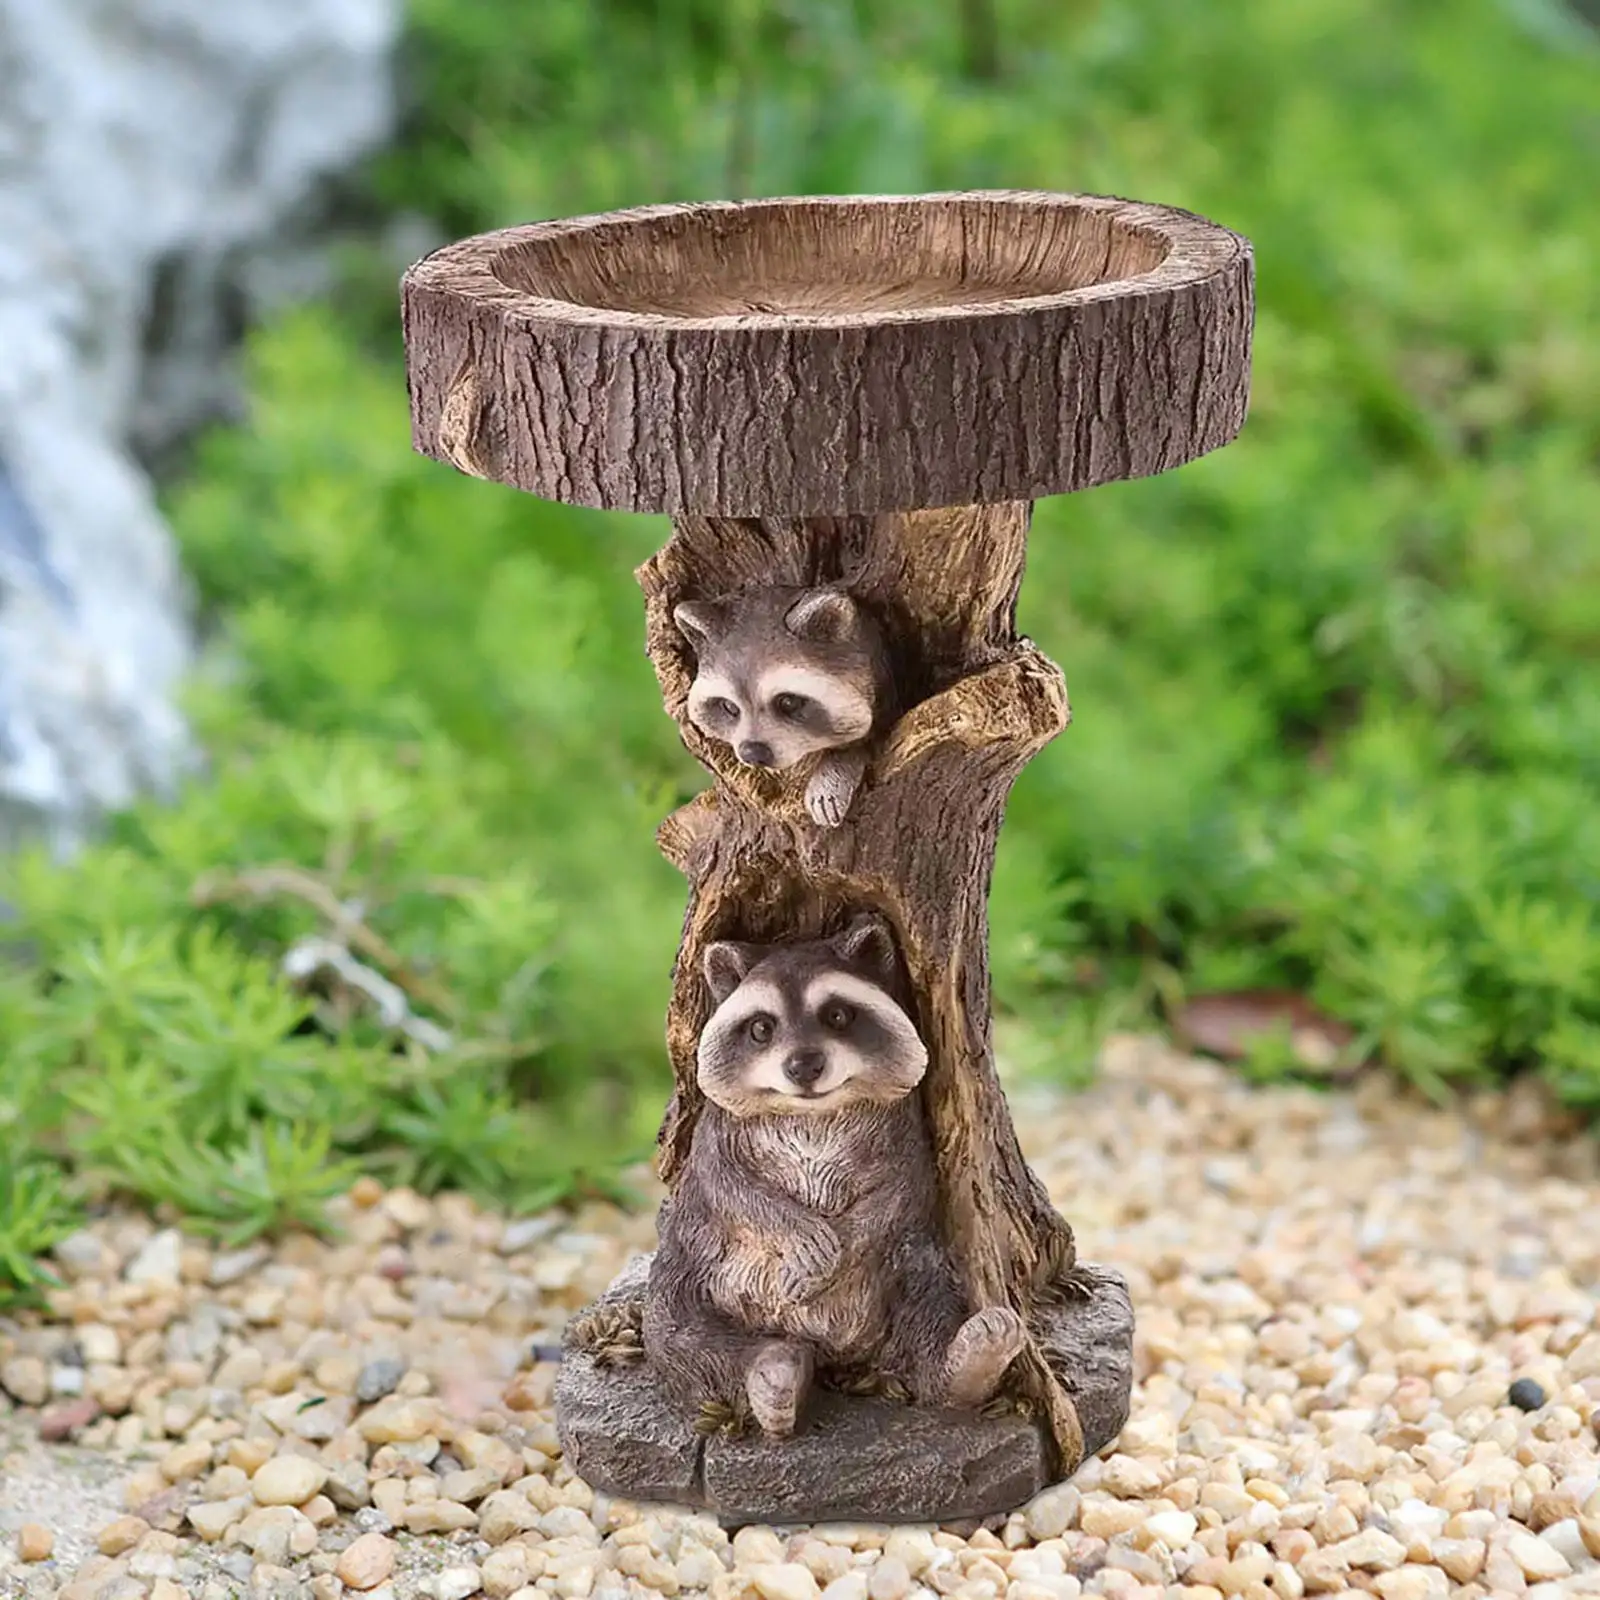 Garden Bird Bath Bowl Raccoon Statue Figurine Resin Feeder for Housewarming Wildbird Drinking Attracting Birds Outside Porch